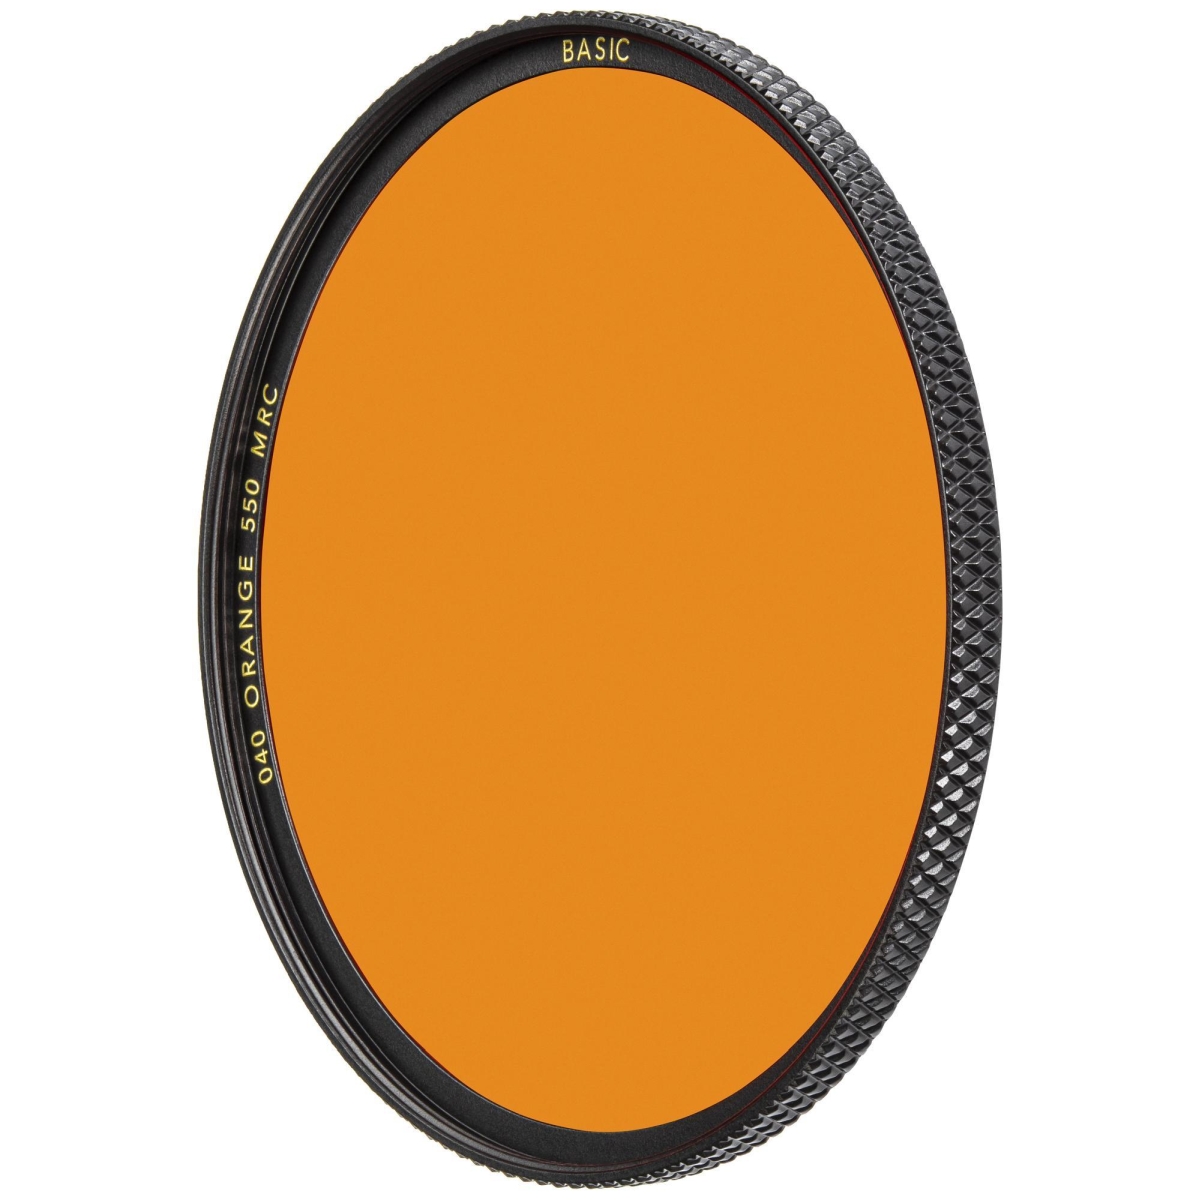 B+W Orange Filter 46 mm 550 MRC Basic